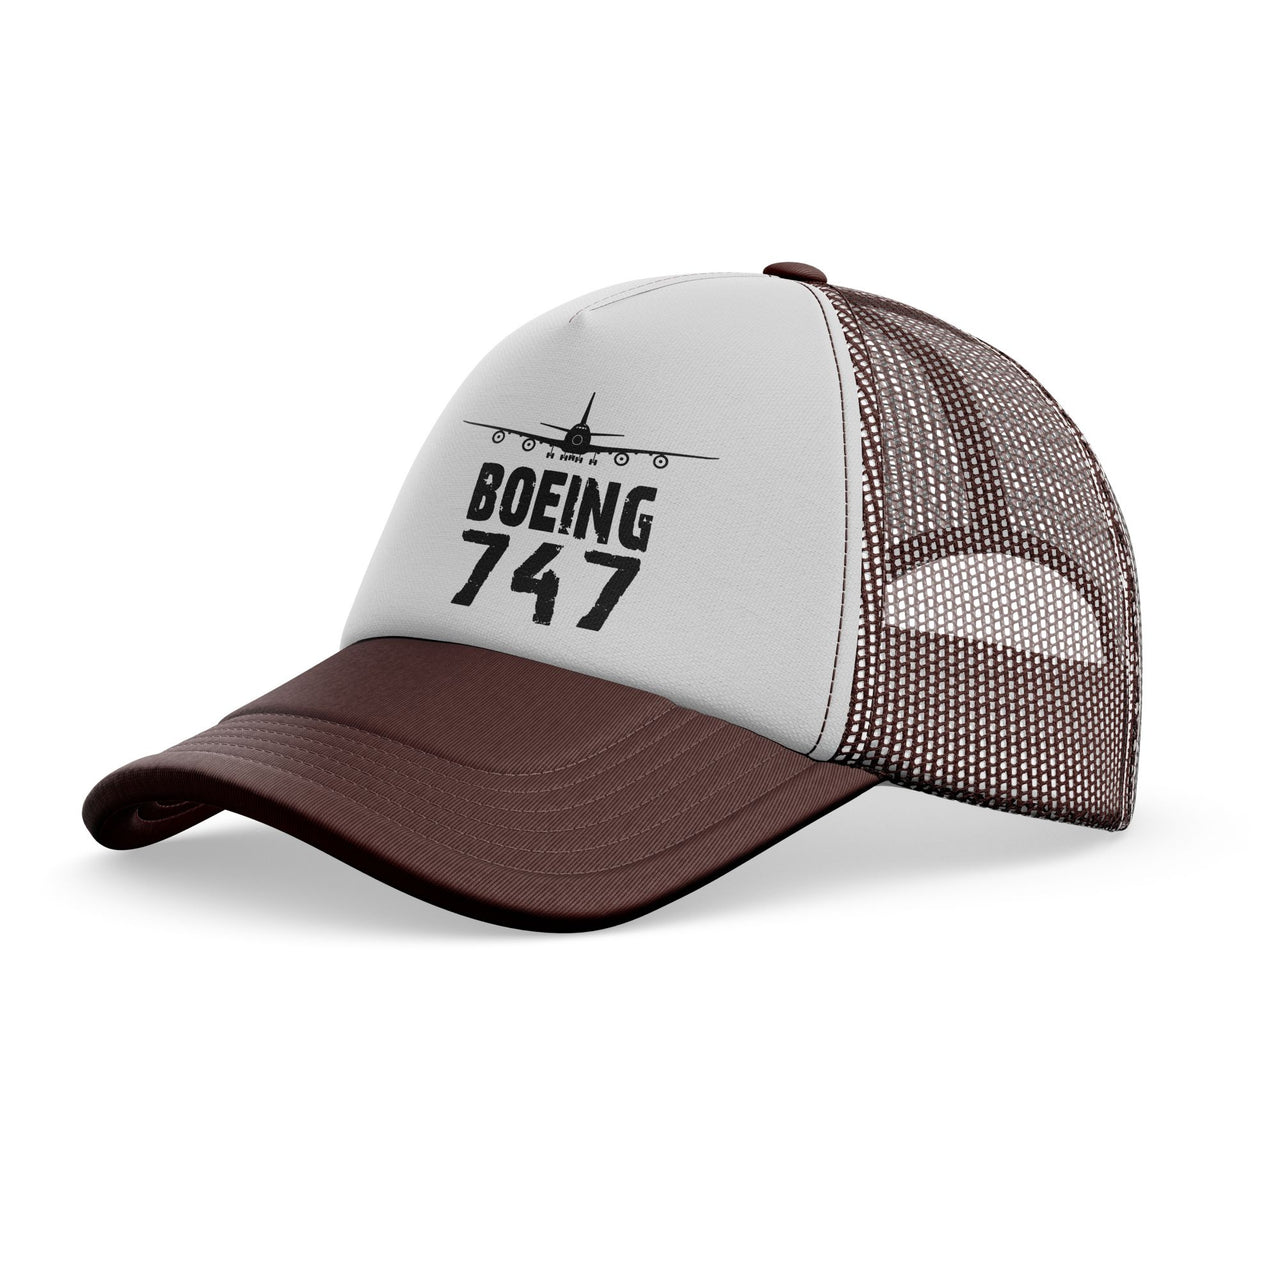 Boeing 747 & Plane Designed Trucker Caps & Hats